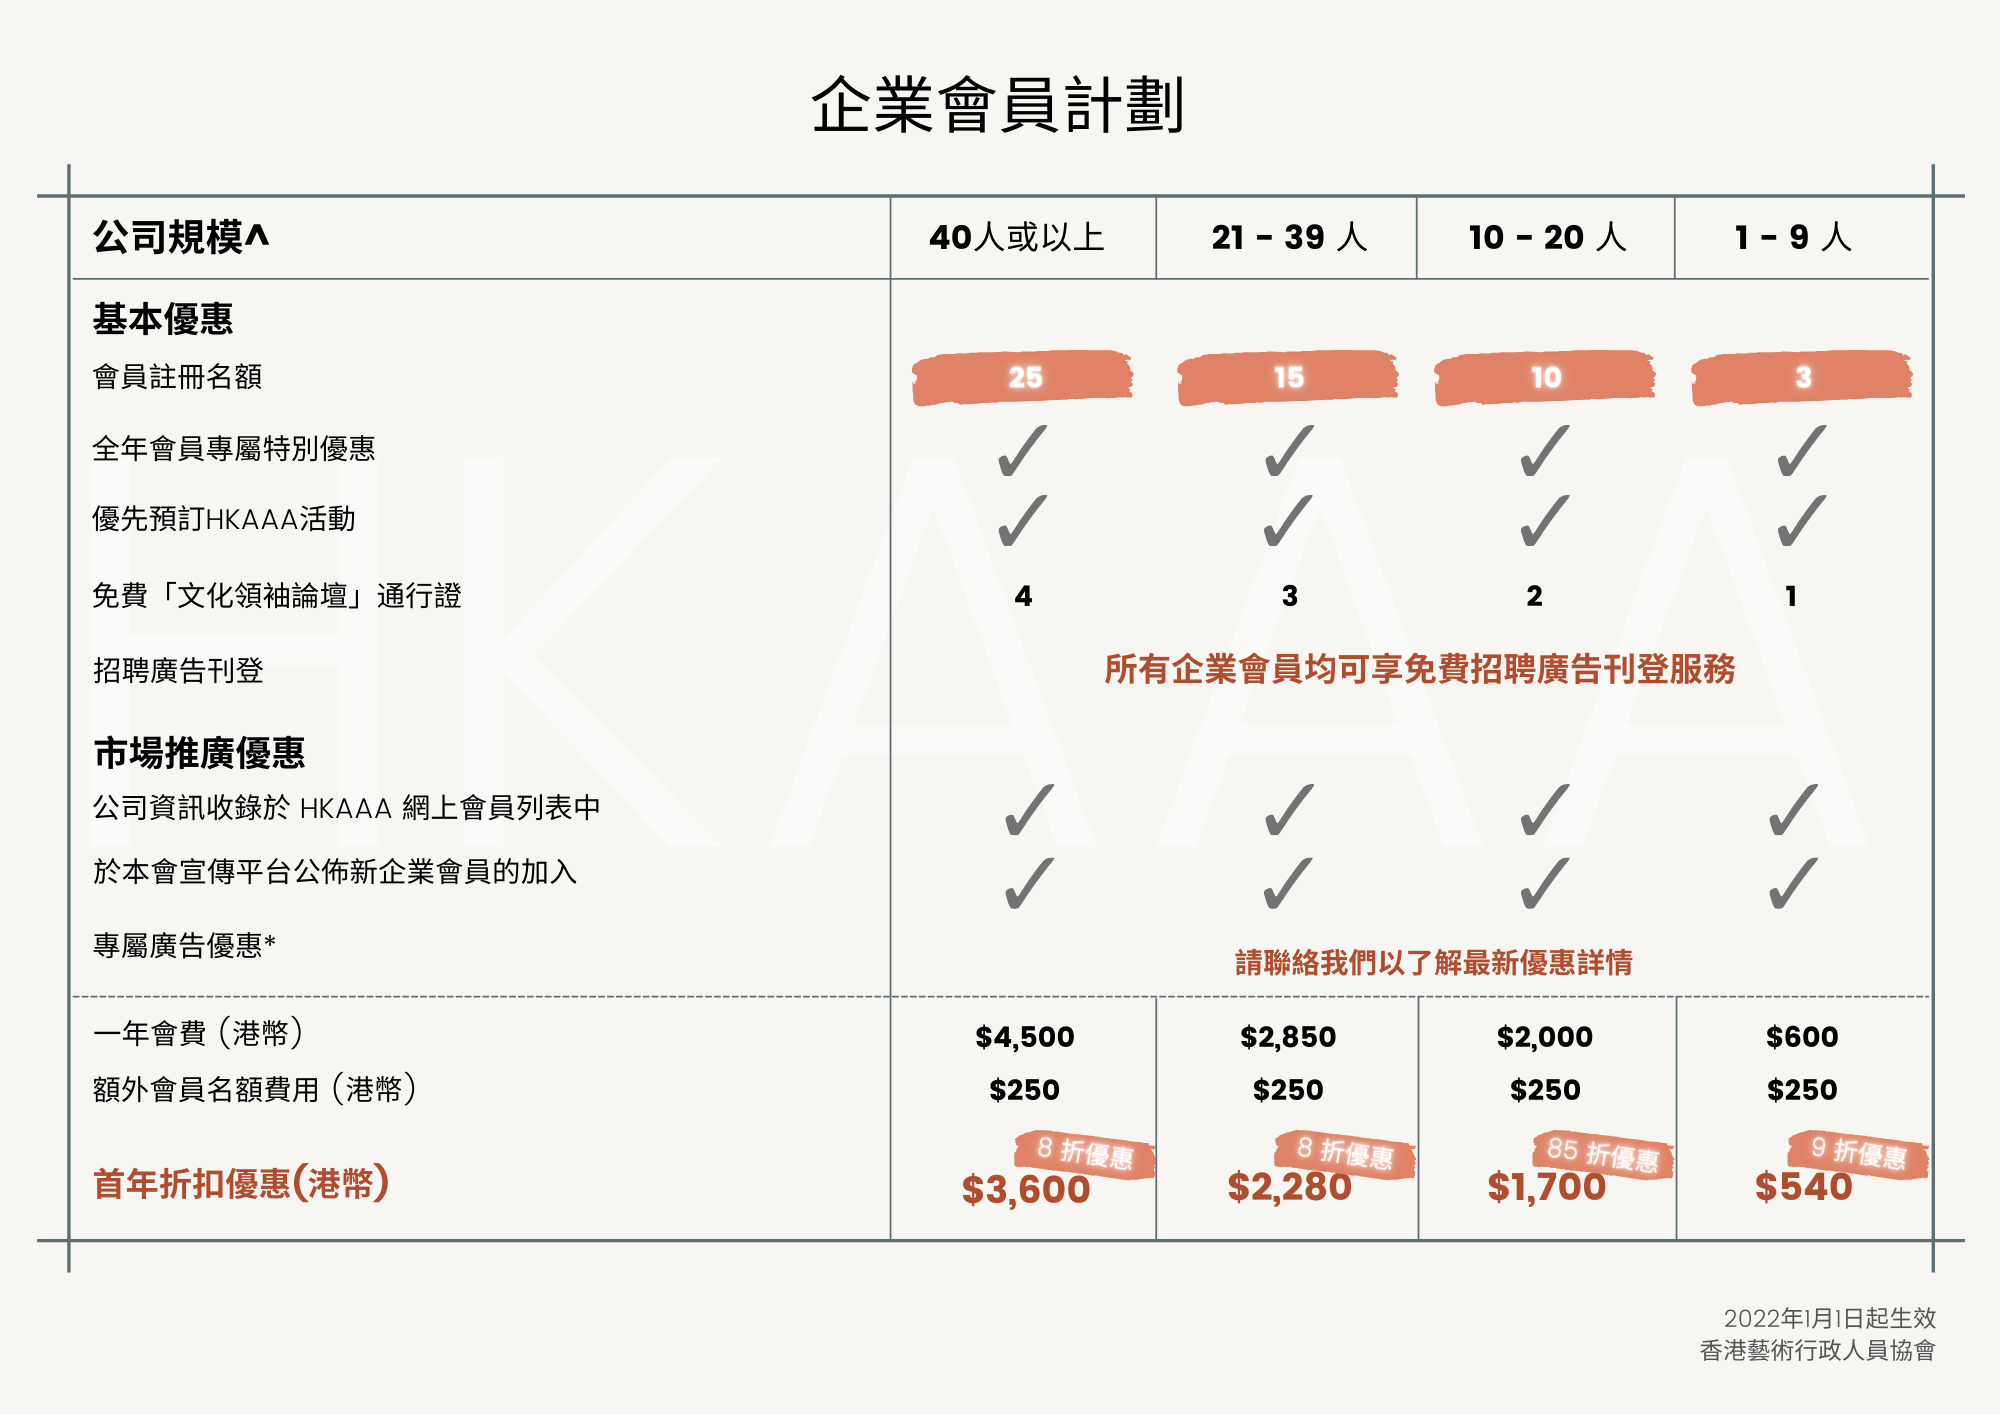 HKAAA Corporate Membership Details_in Chinese